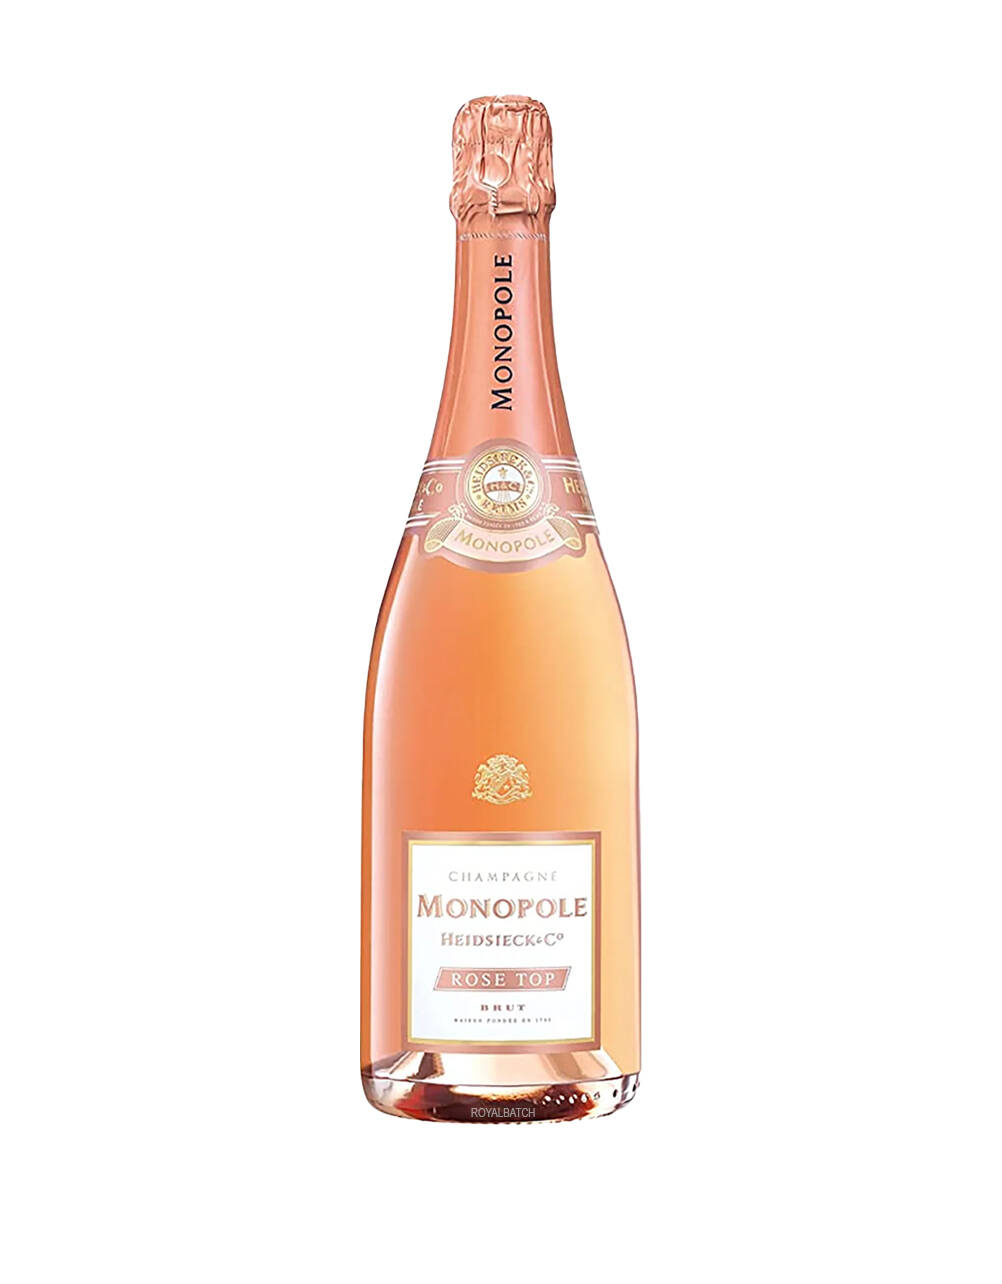 Monopole Heidsieck Rose Top Brut Champagne